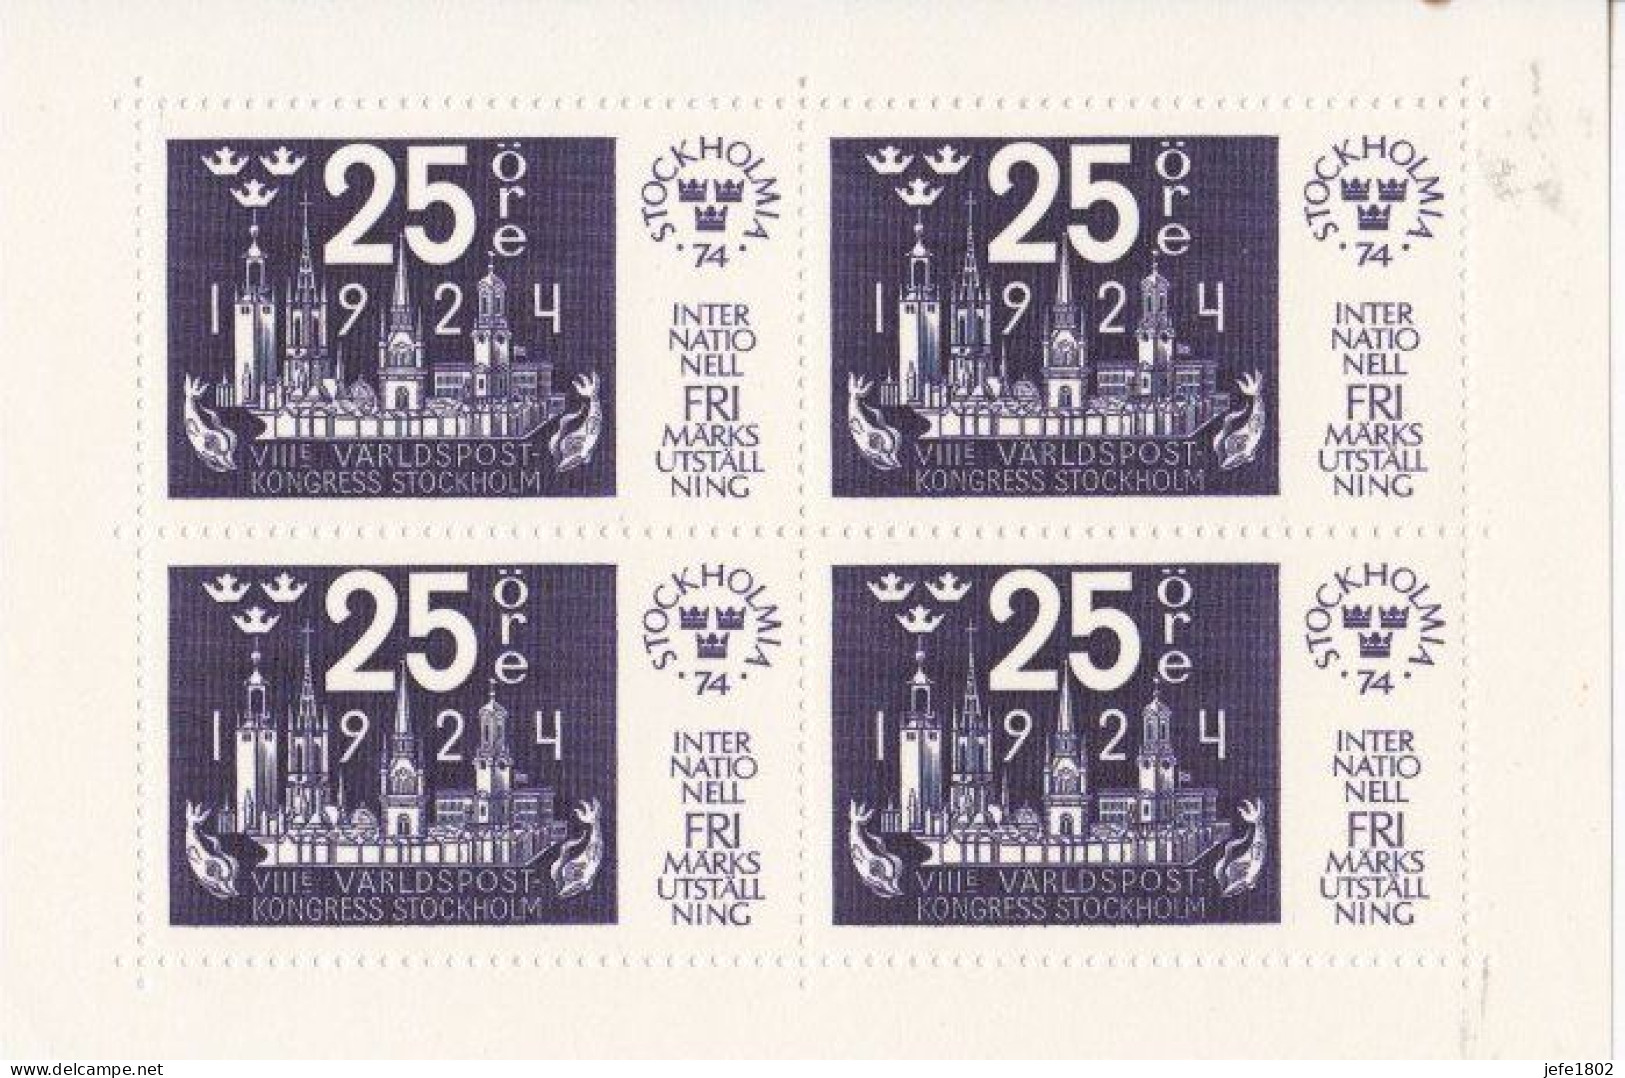 International Stamp Exhibition - Stockholmia 74 / Admission Ticket 1 079795 (5 Kr) - Blocs-feuillets